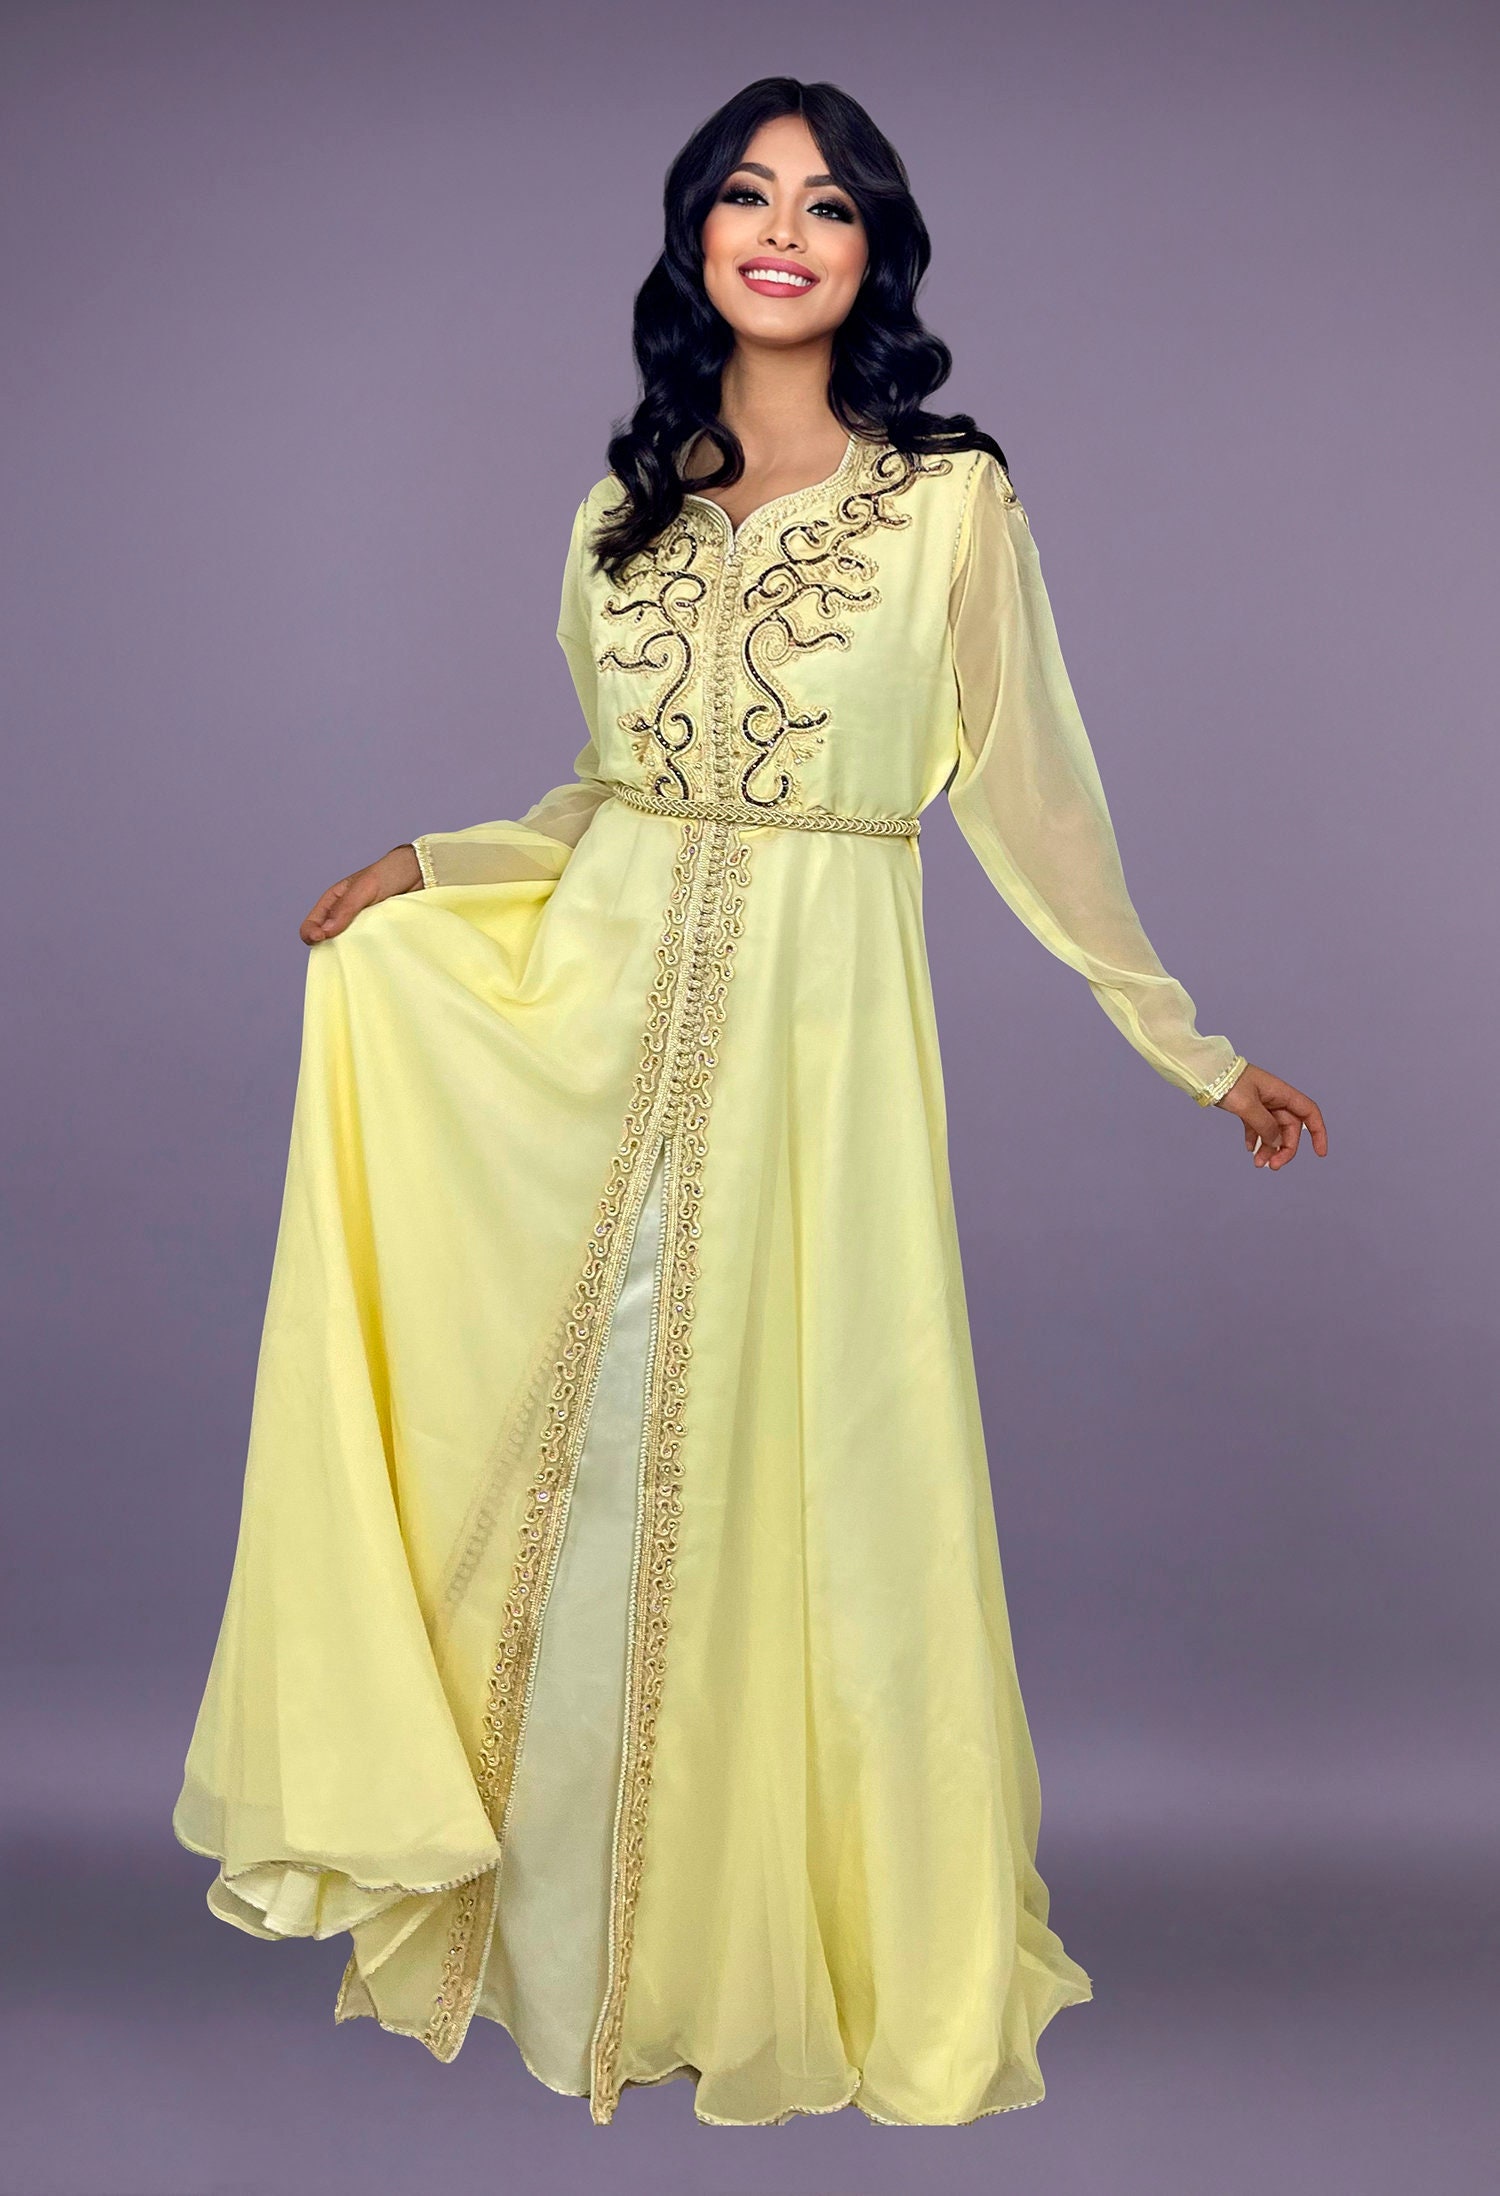 robe de soirée orientale pour mariage, robe arabe mariage, robe mariée